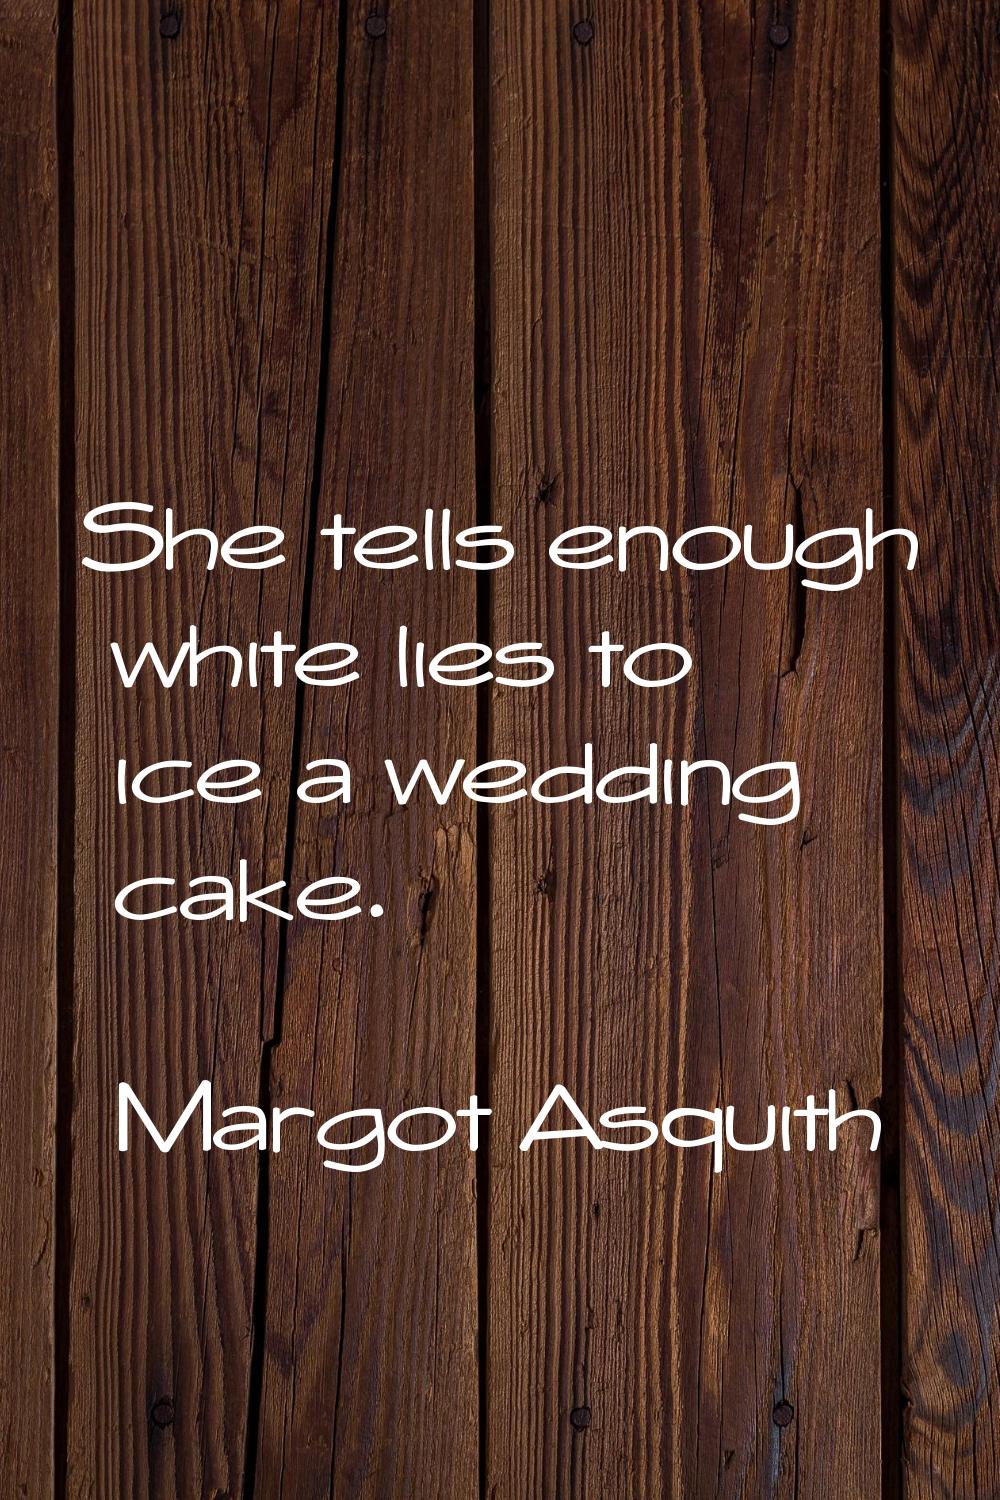 She tells enough white lies to ice a wedding cake.